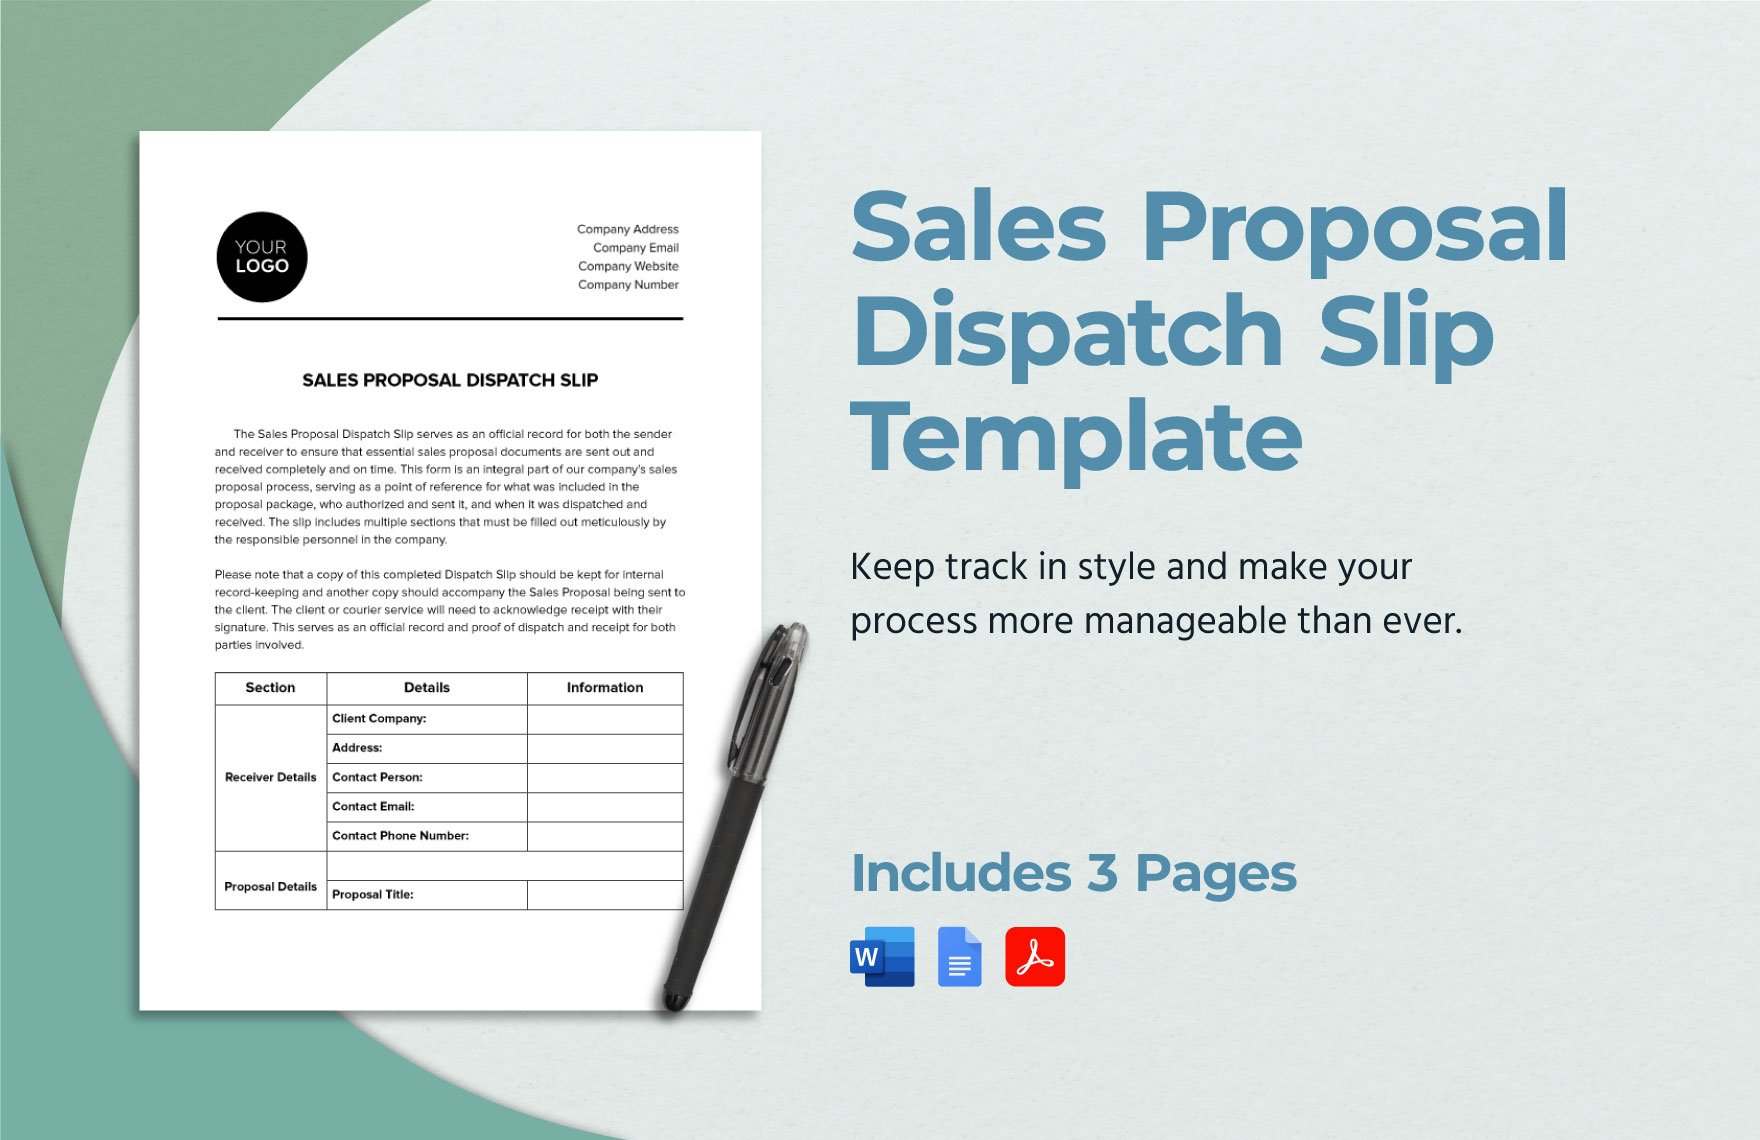 Sales Proposal Dispatch Slip Template in Word, Google Docs, PDF